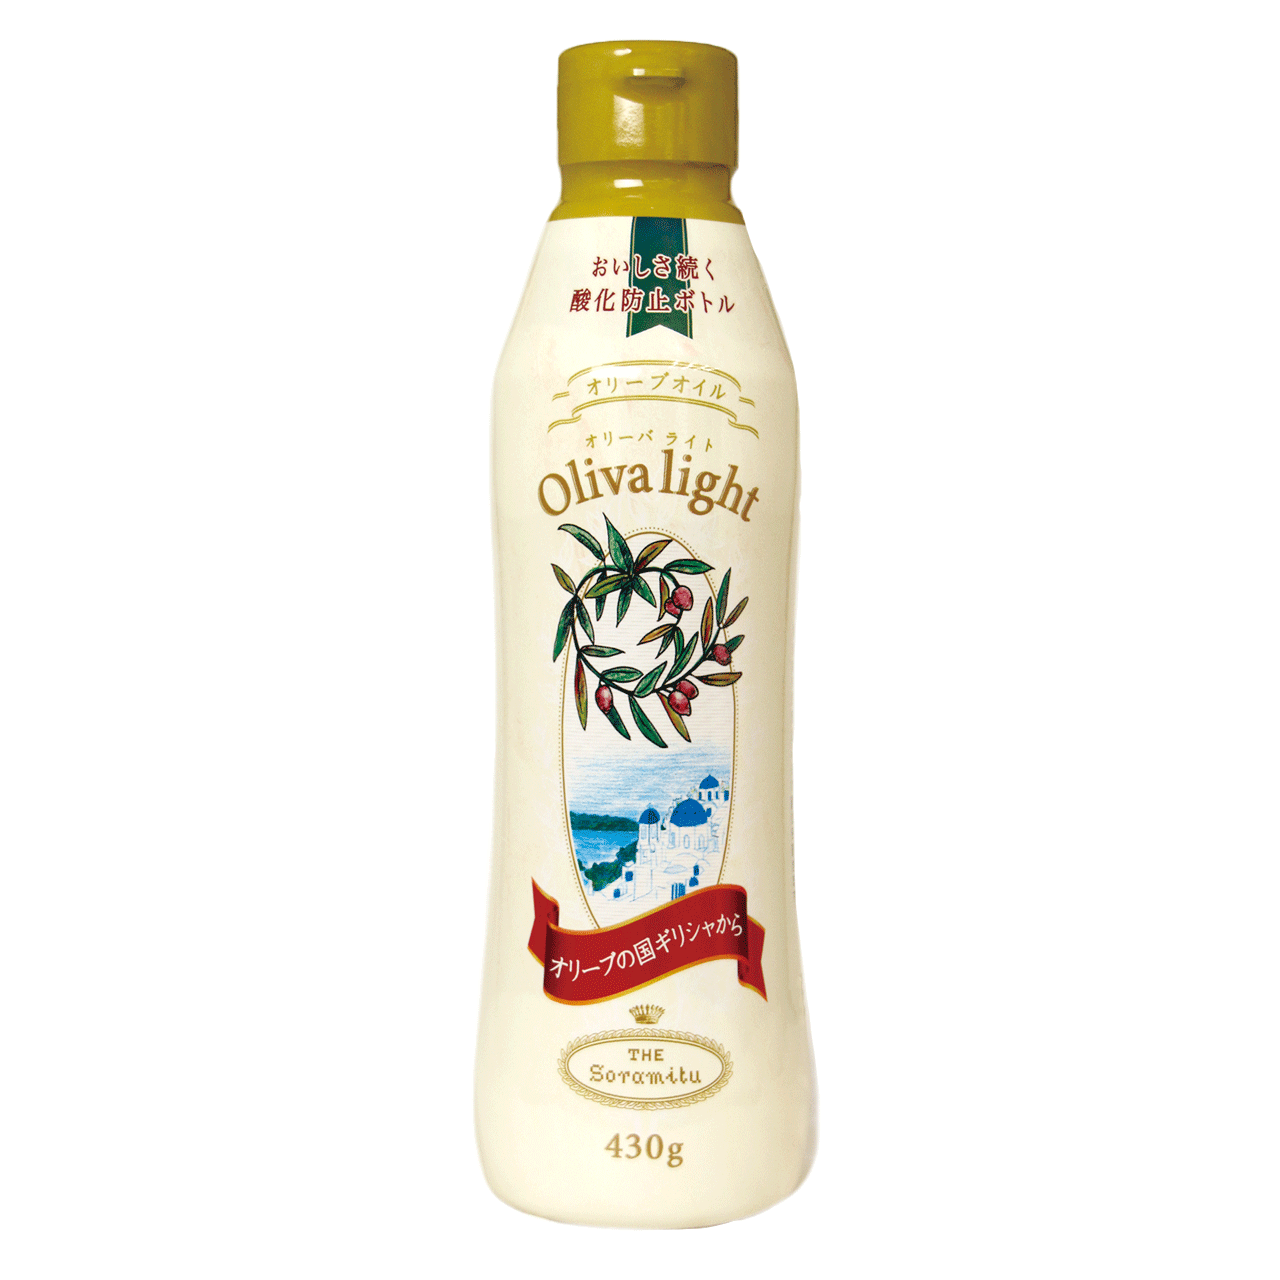 Oliva light430g PET - A blend of 25% extra virgin olive oil and 75% refined olive oil